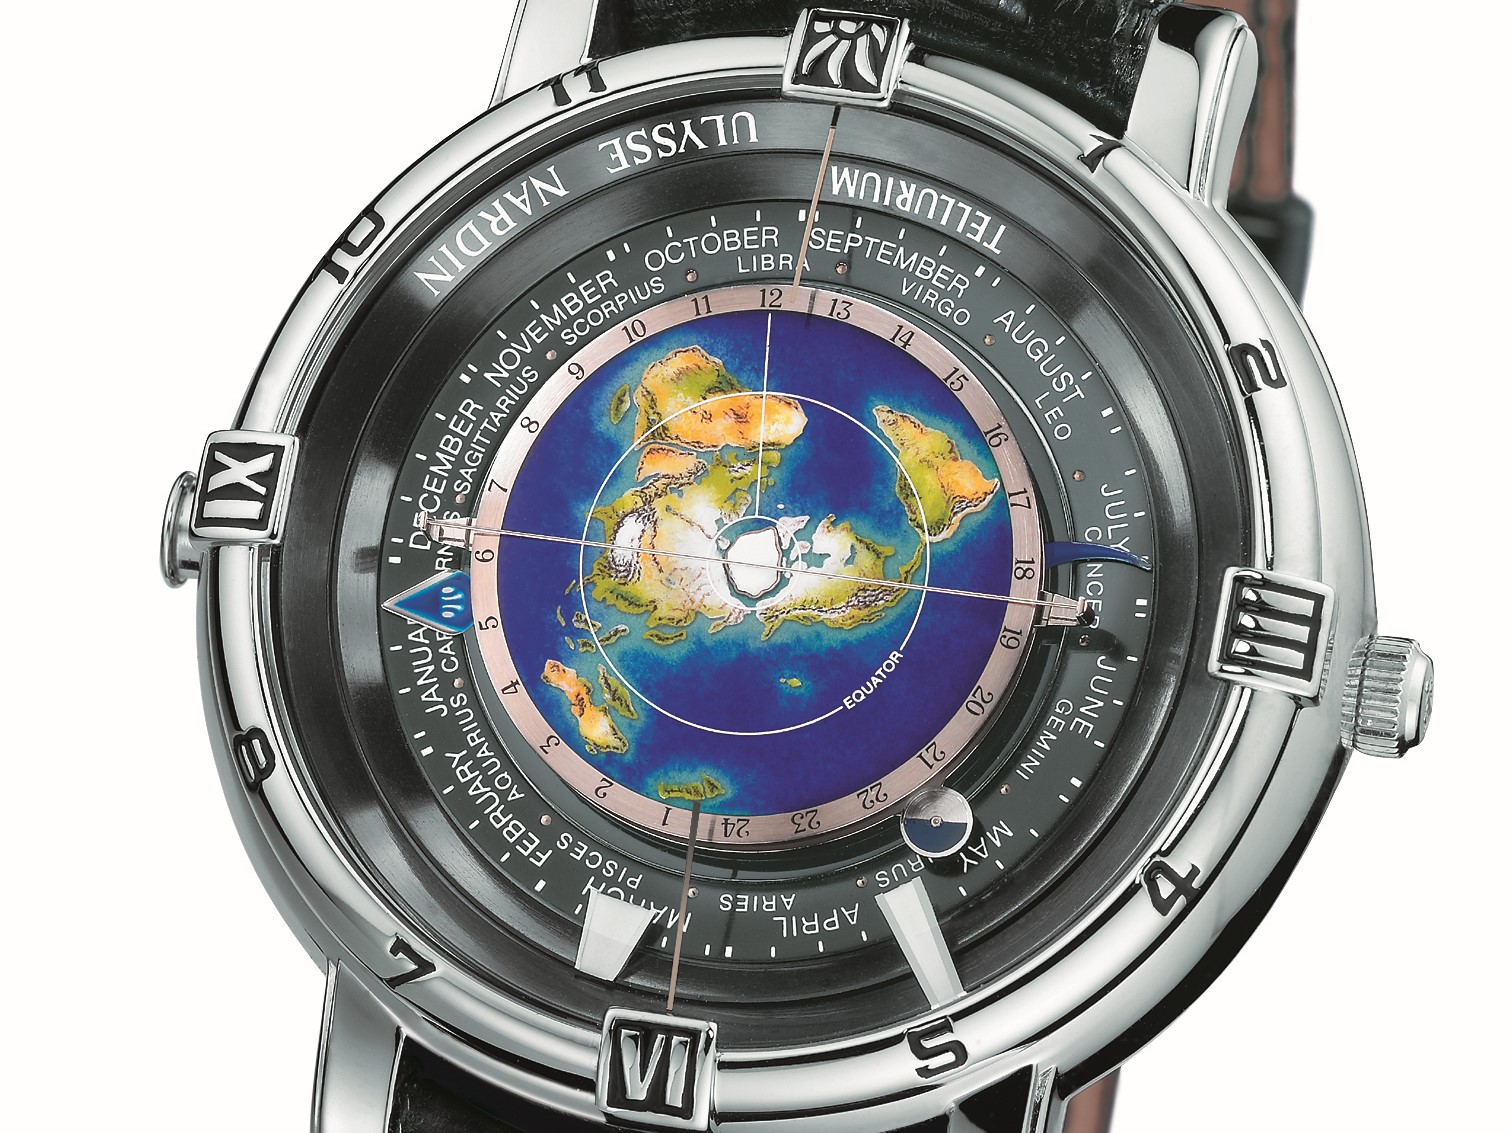 A Ulysse Nardin Tellurium watch design from the 1980s